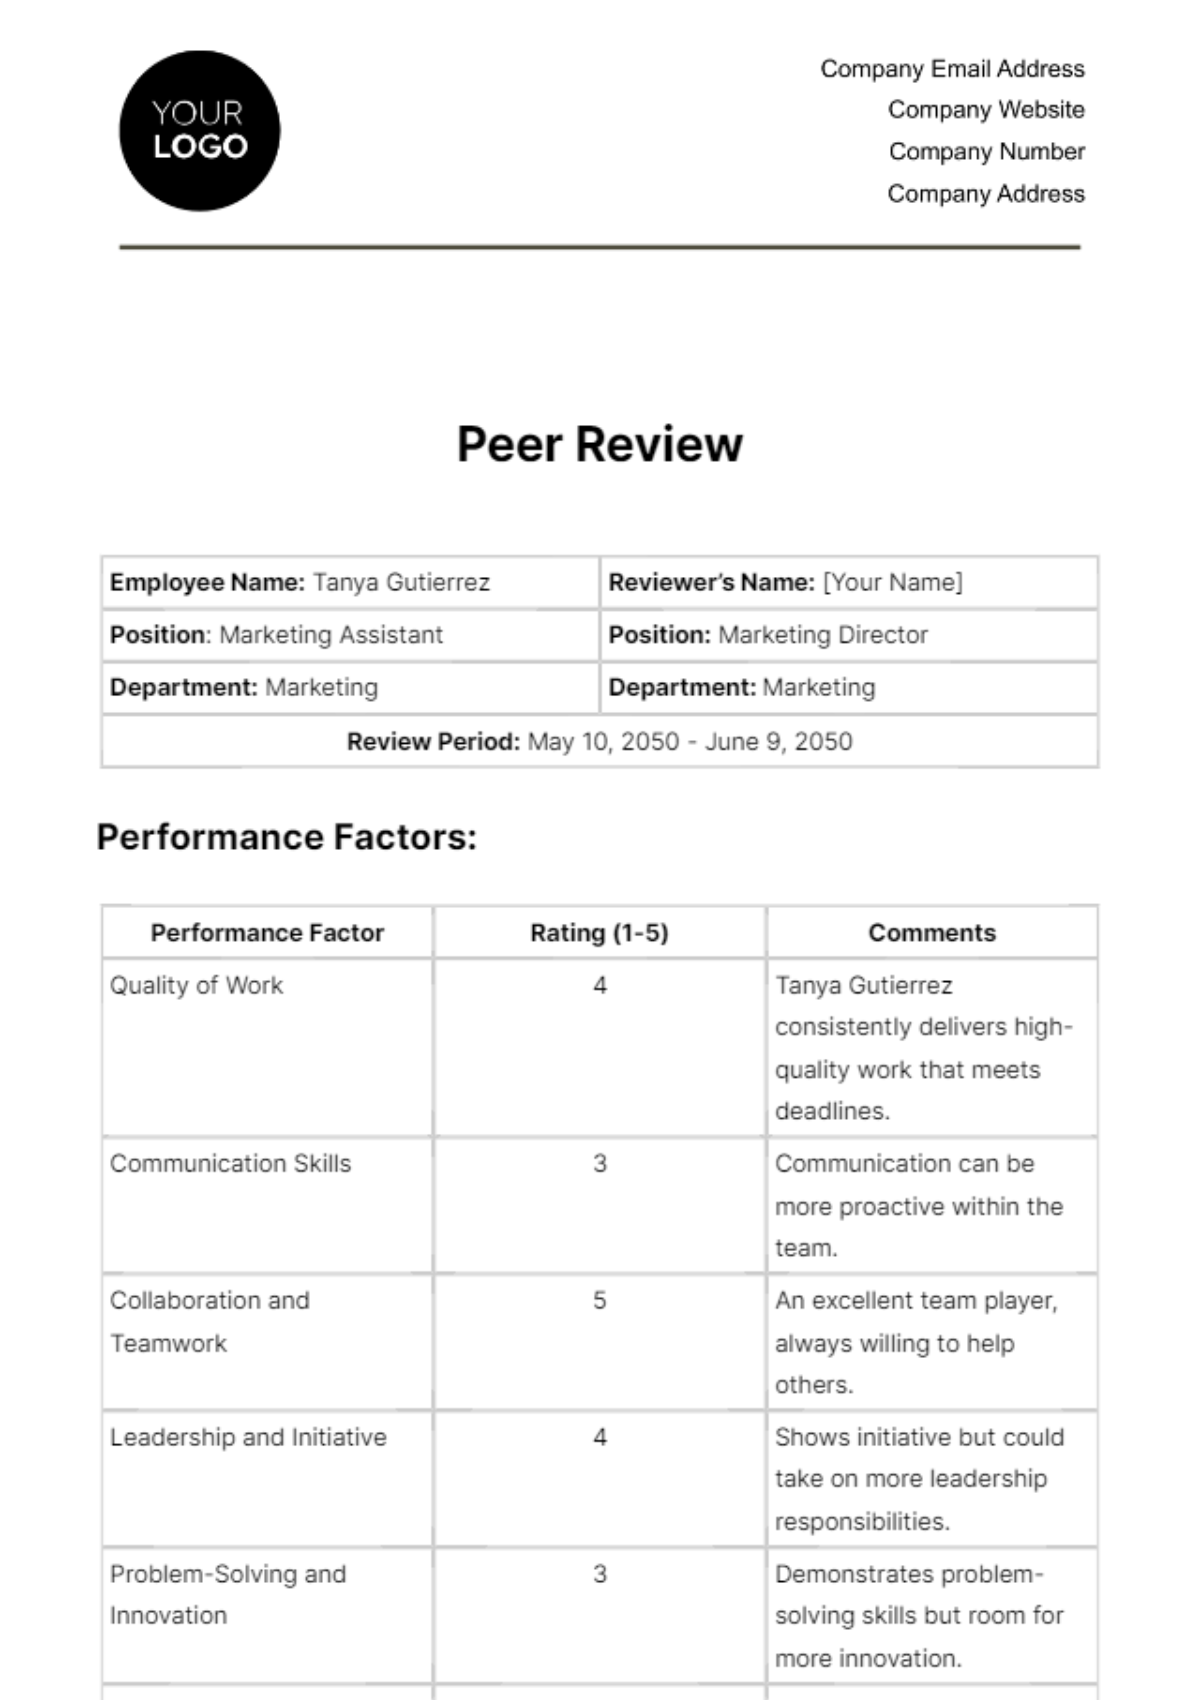 Peer Review HR Template